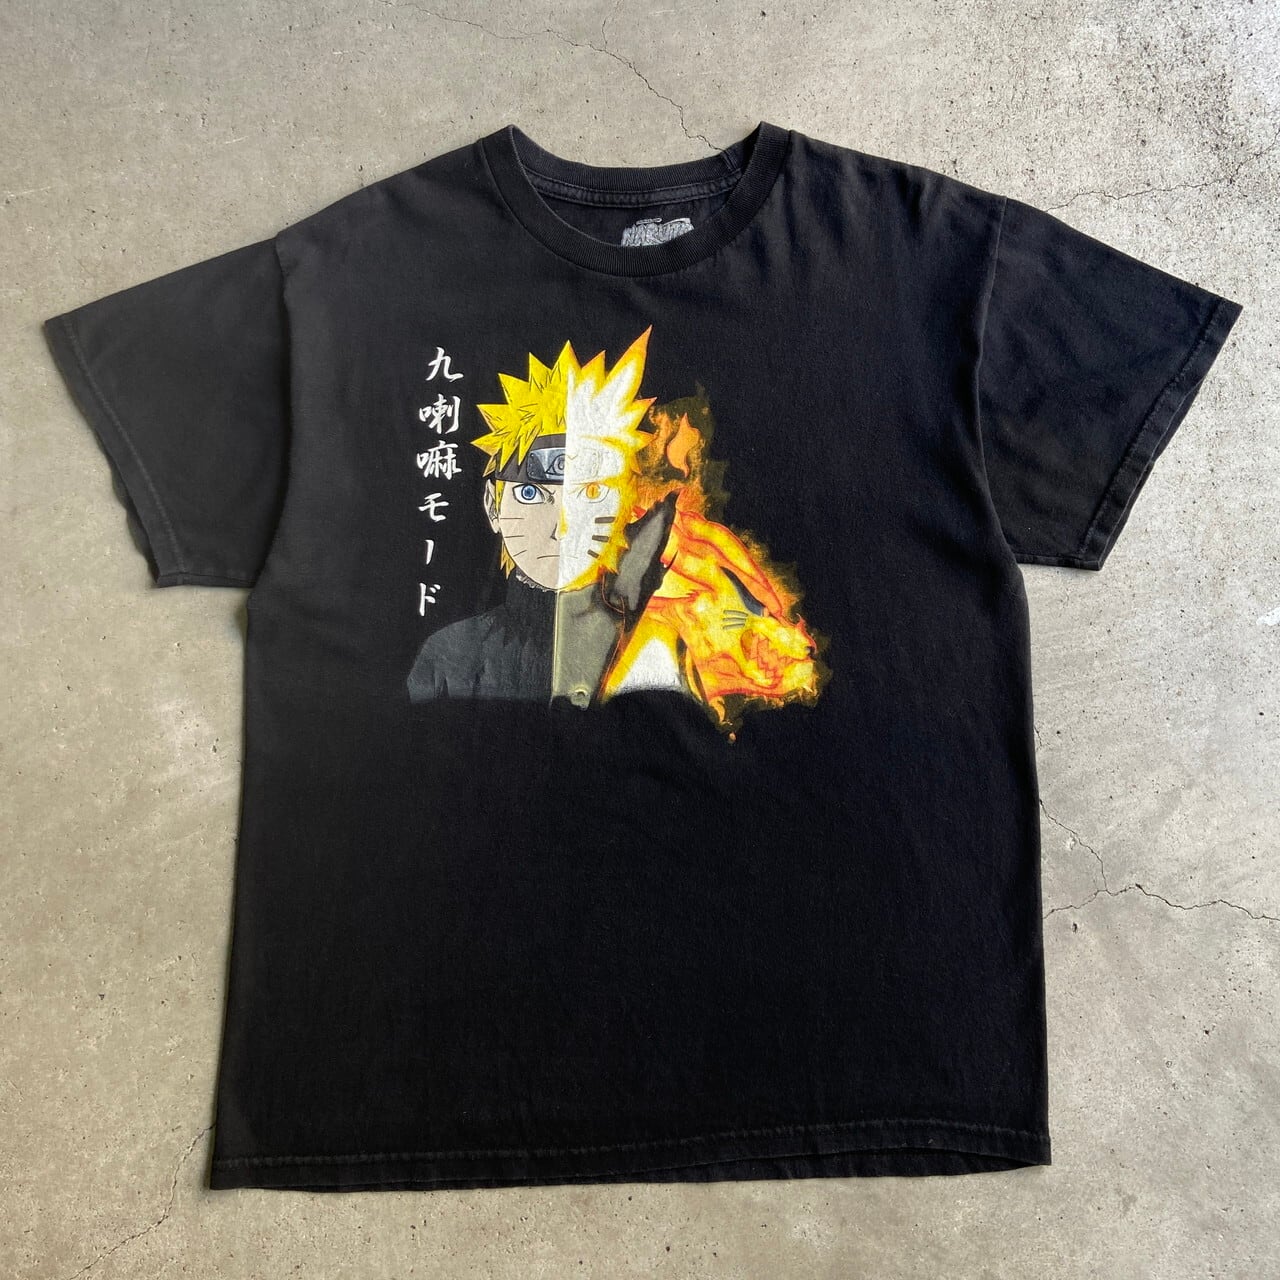 NARUTO ナルト vintage Tシャツ アニメ ヴィンテージ